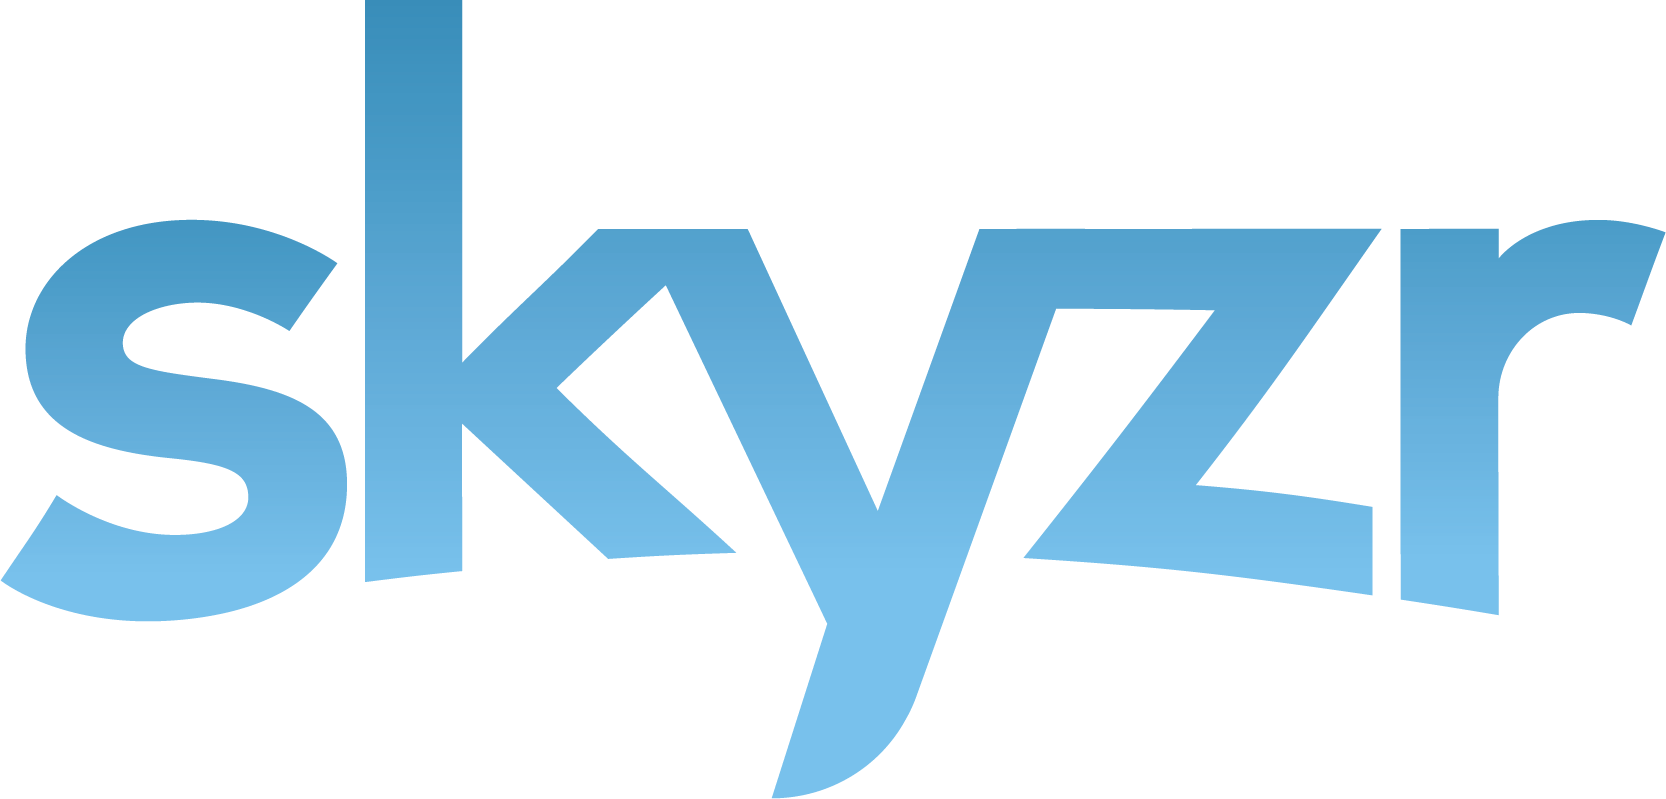 skyzr GmbH